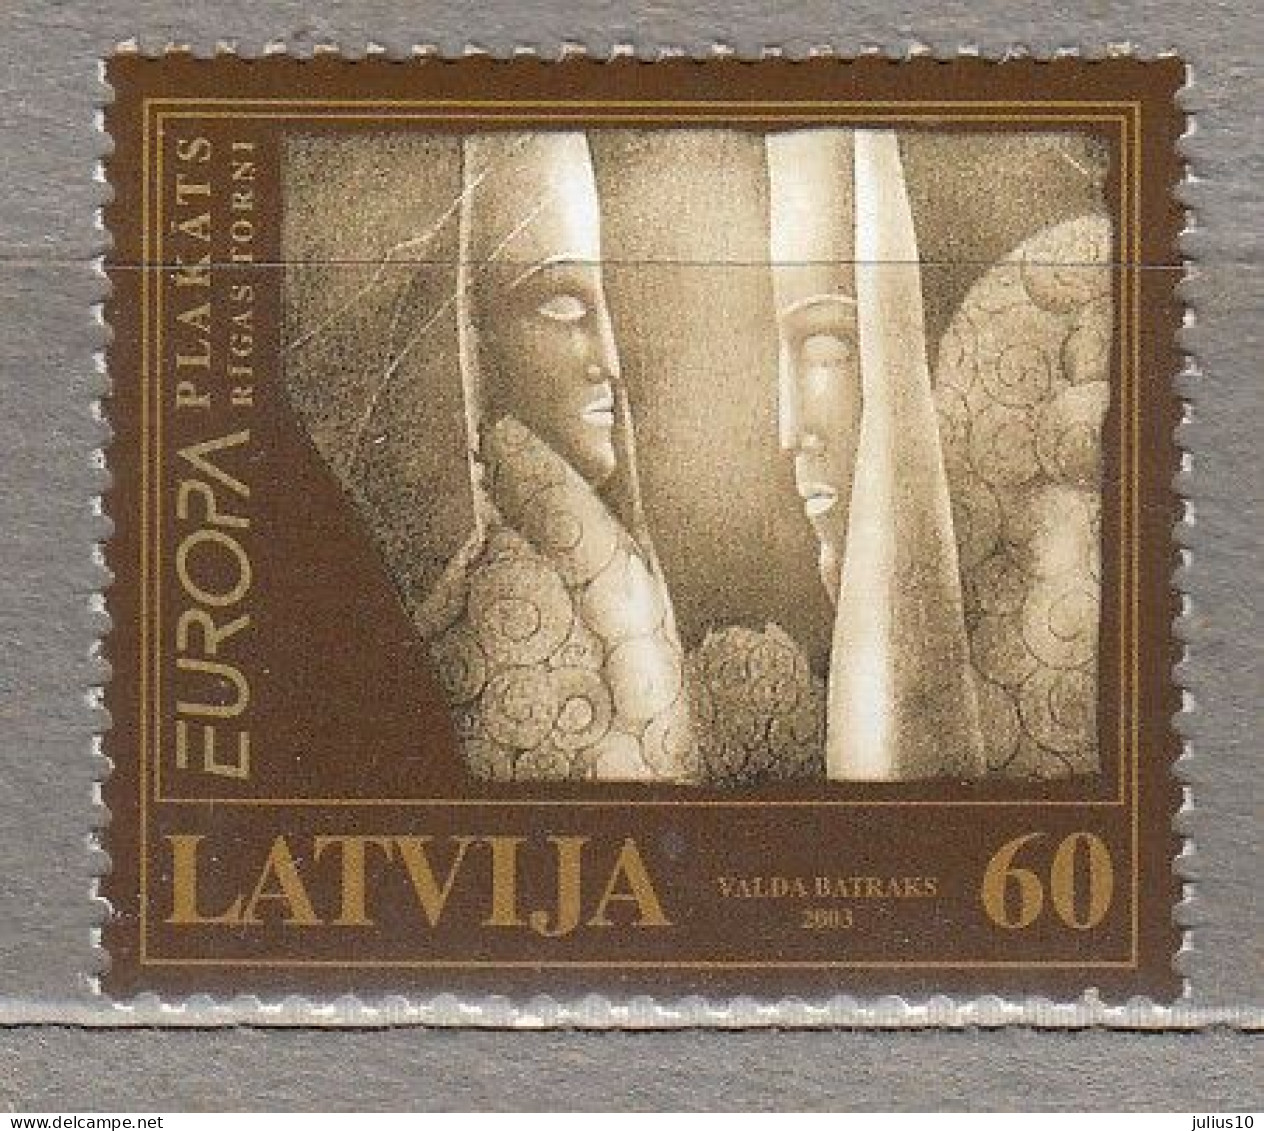 LATVIA 2003 Europa CEPT MNH(**) Mi 590 #Lv88 - 2003